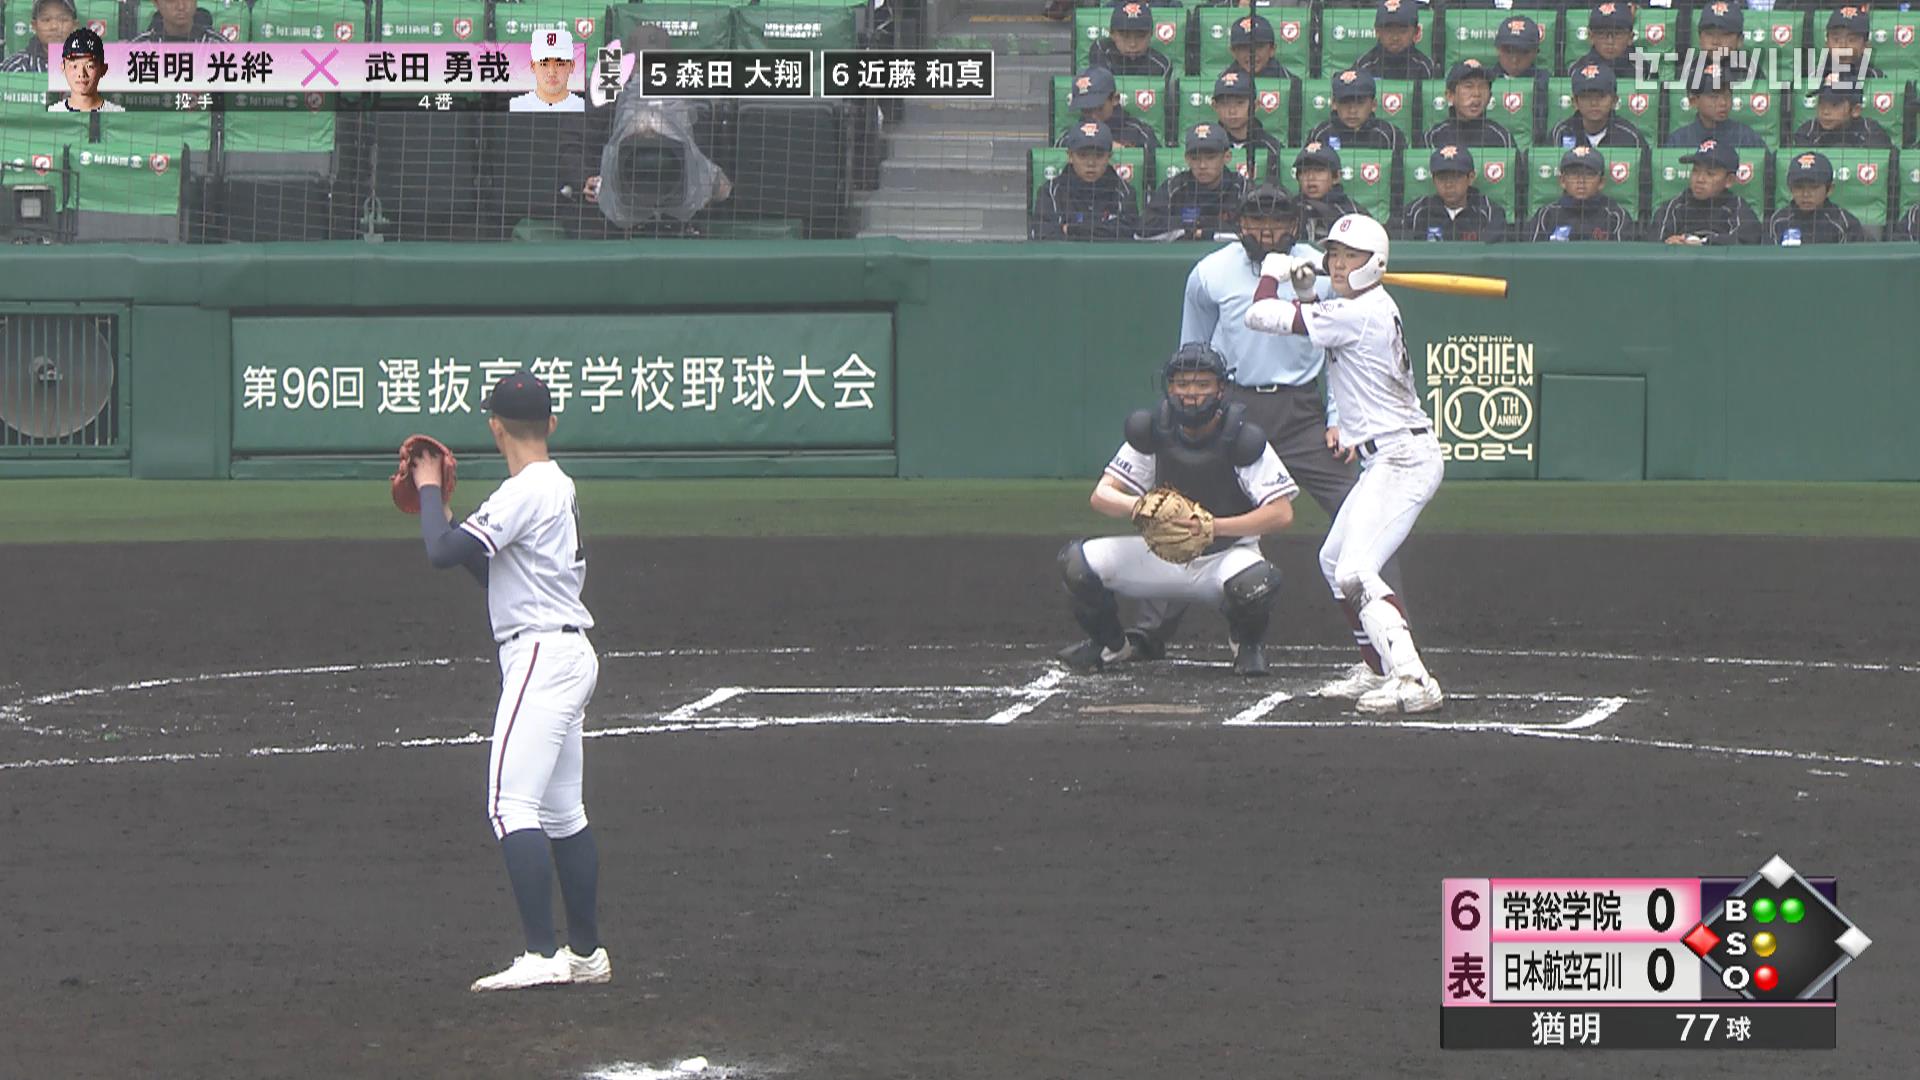 【センバツ高校野球】日本航空石川 - 常総学院 6回表 常総学院・武田 勇哉の打席。一死三塁、右翼手への犠飛で先制。